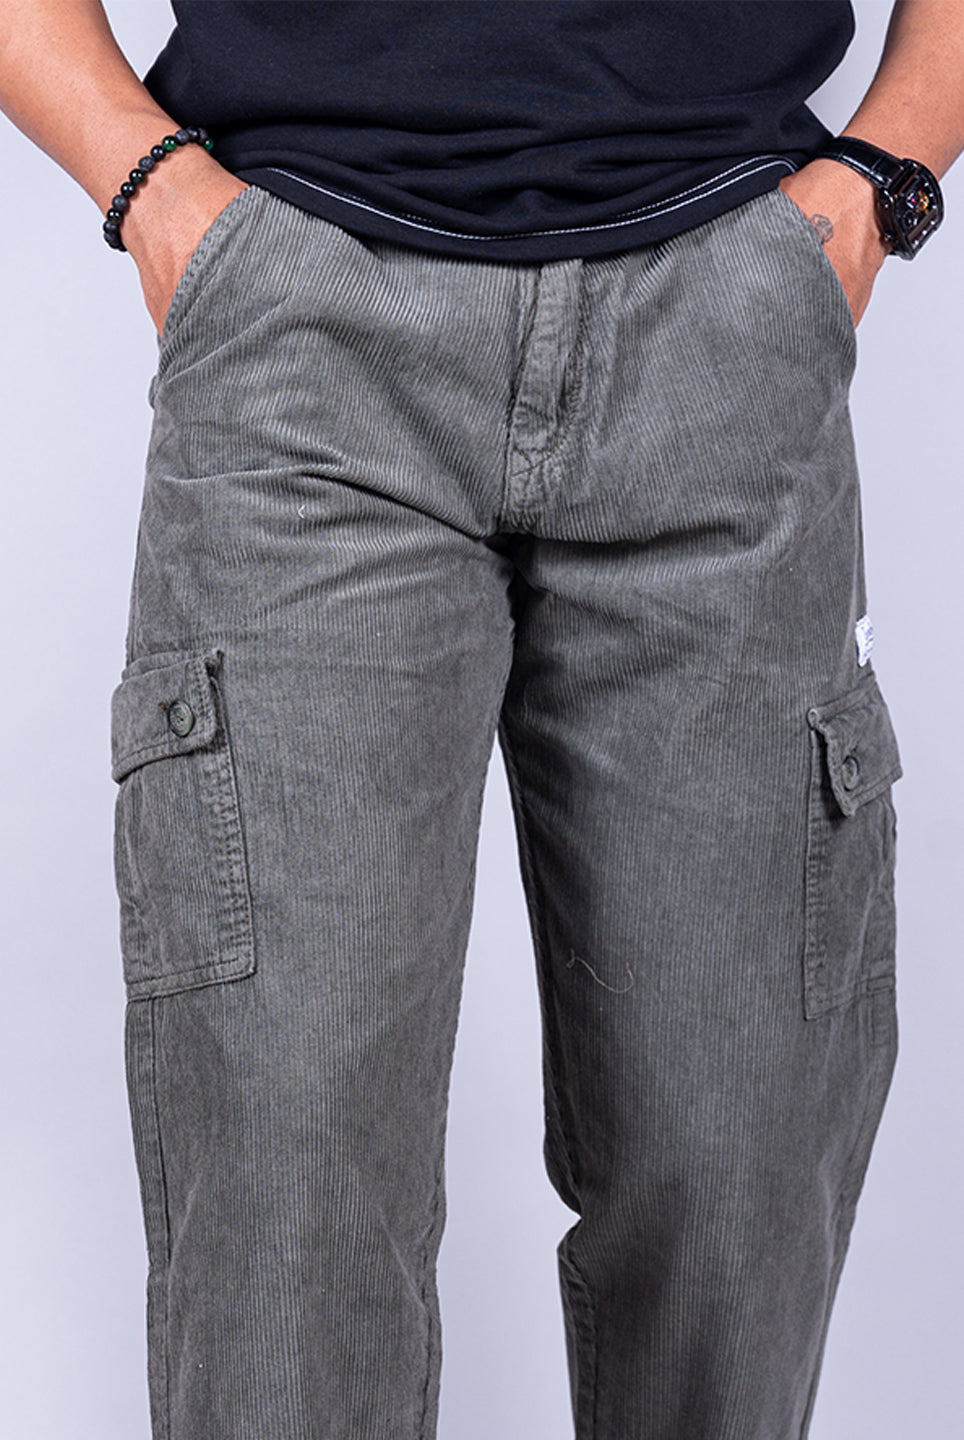 Buy Formal Pants For Men Online In India: Tistabene - Tistabene